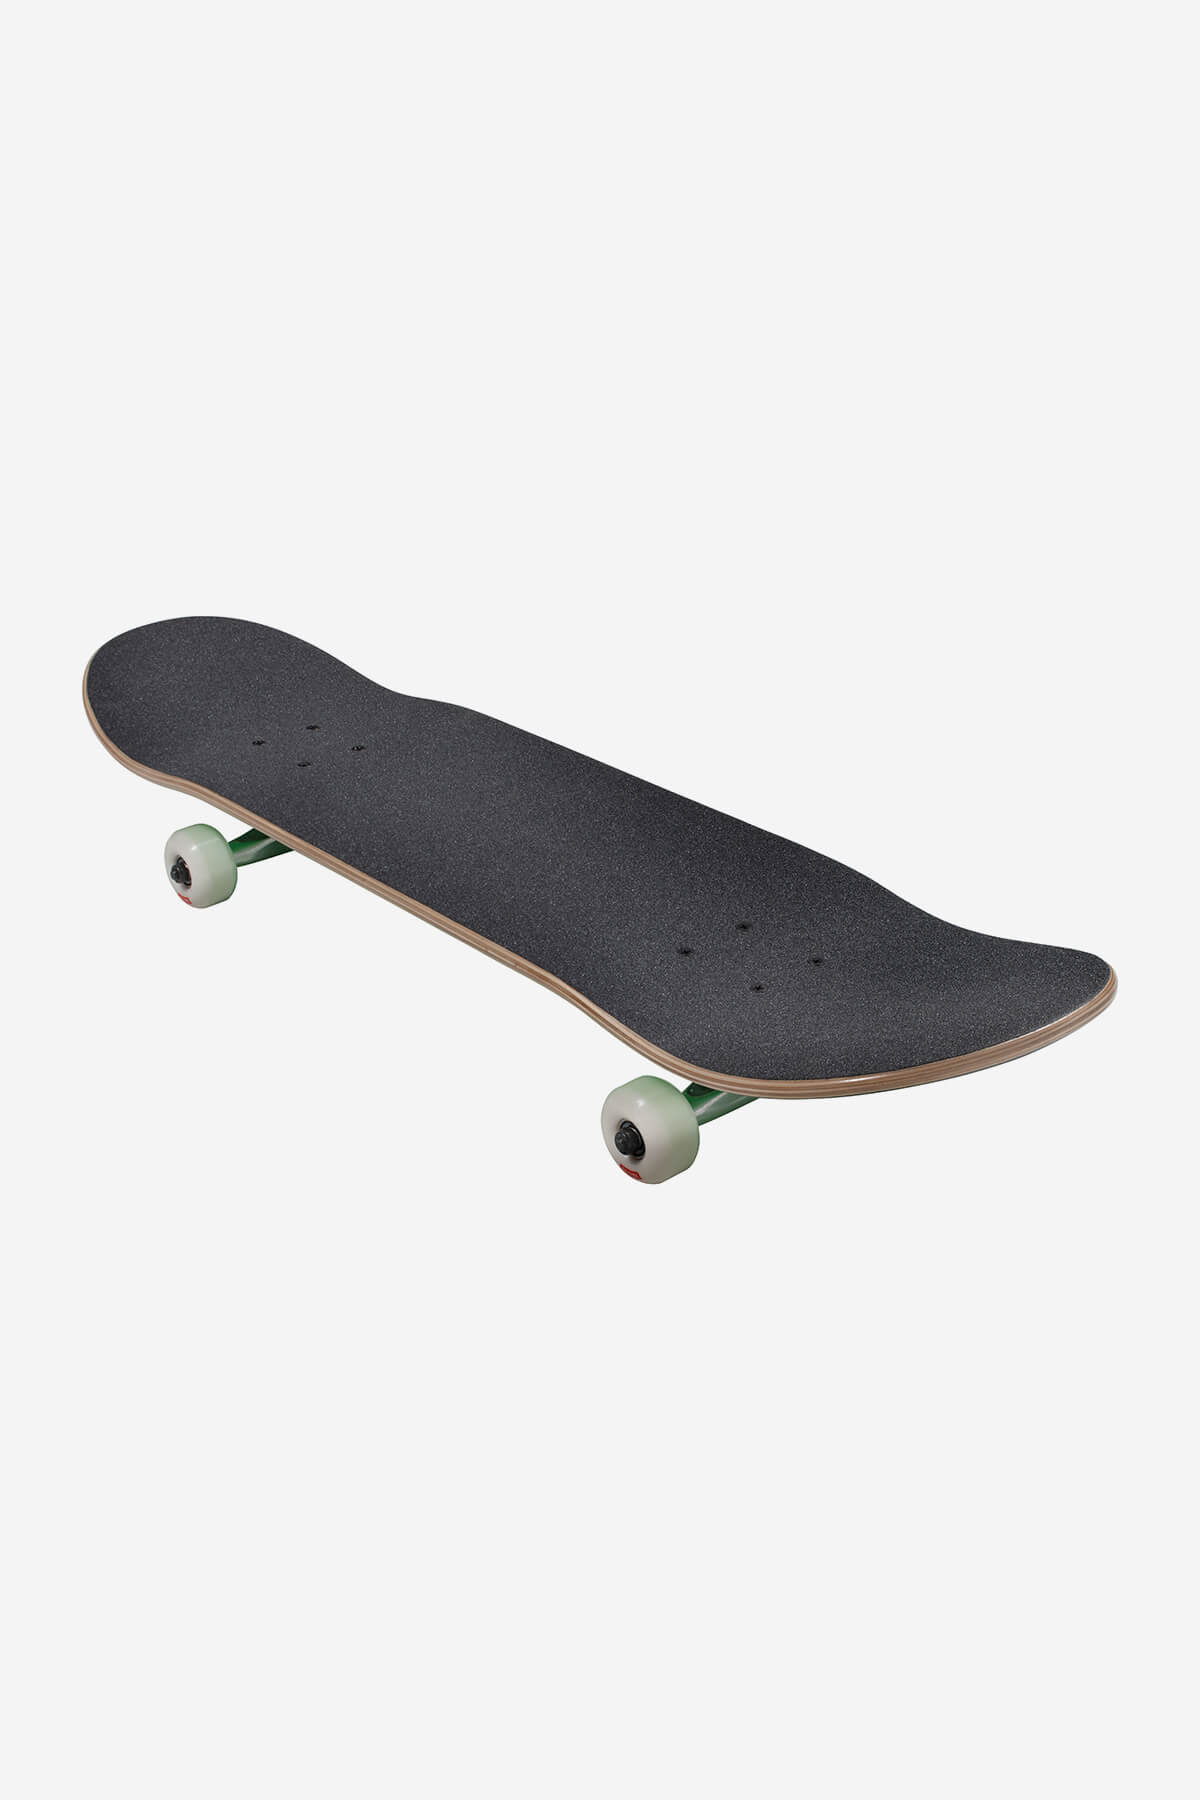 Globe Skateboard completa Goodstock 8.0" Completa Skateboard en NEON GREEN